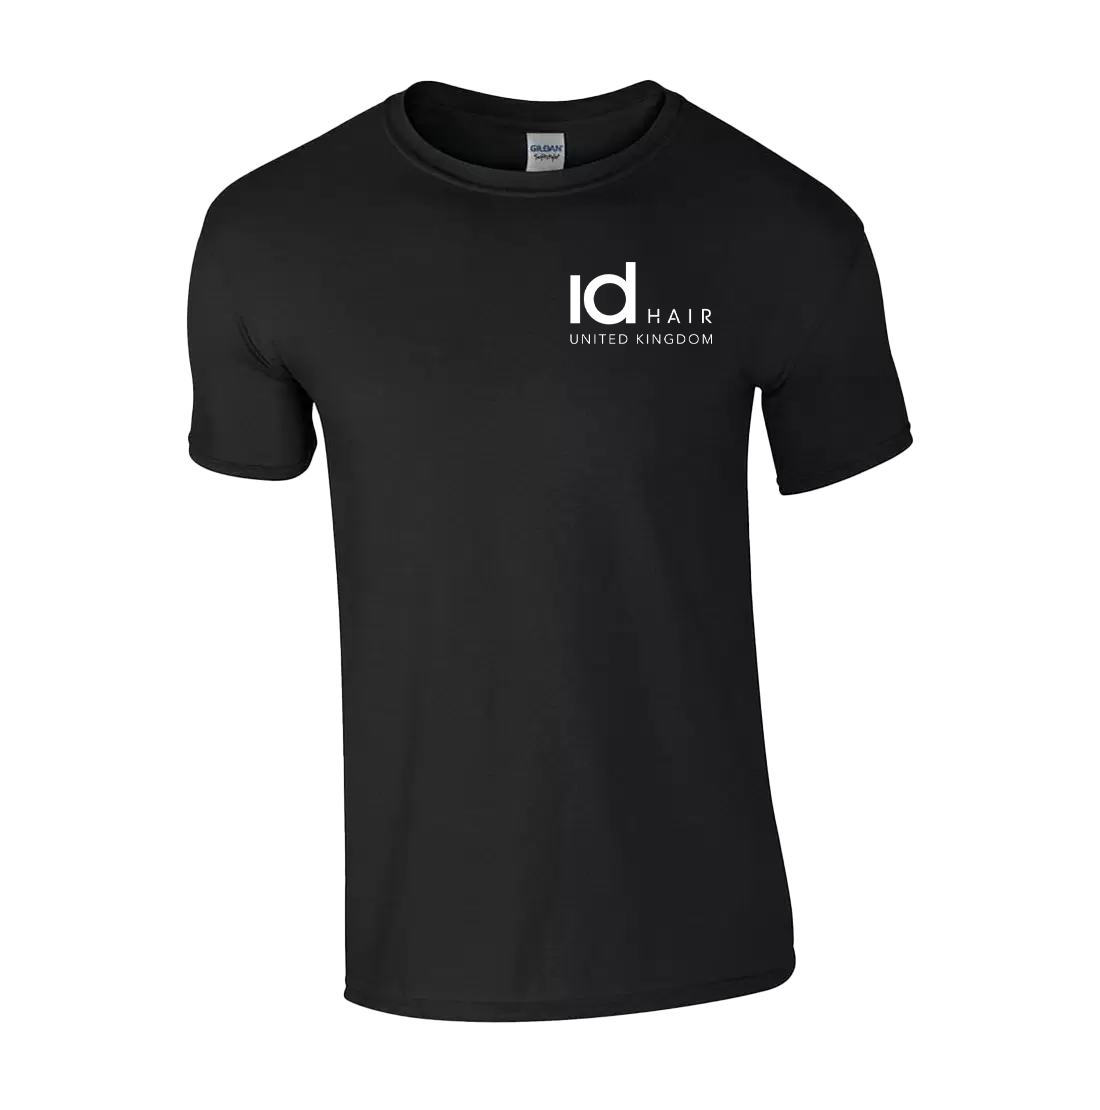 IdHAIR UK Official Black T.Shirt - Large - Large